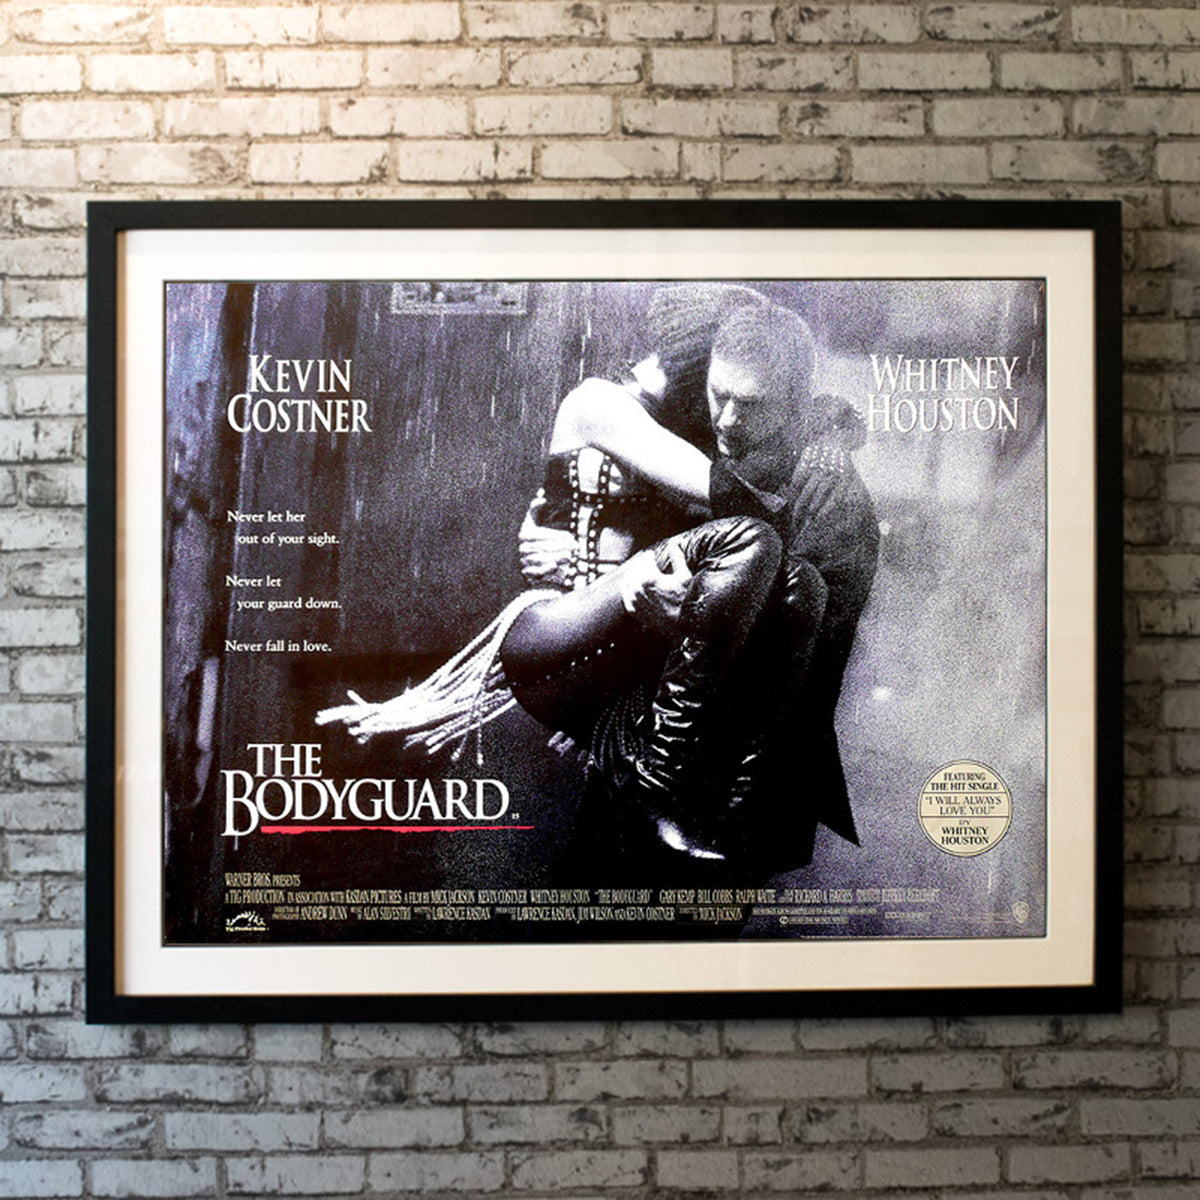 Original Movie Poster of Bodyguard, The (1992)